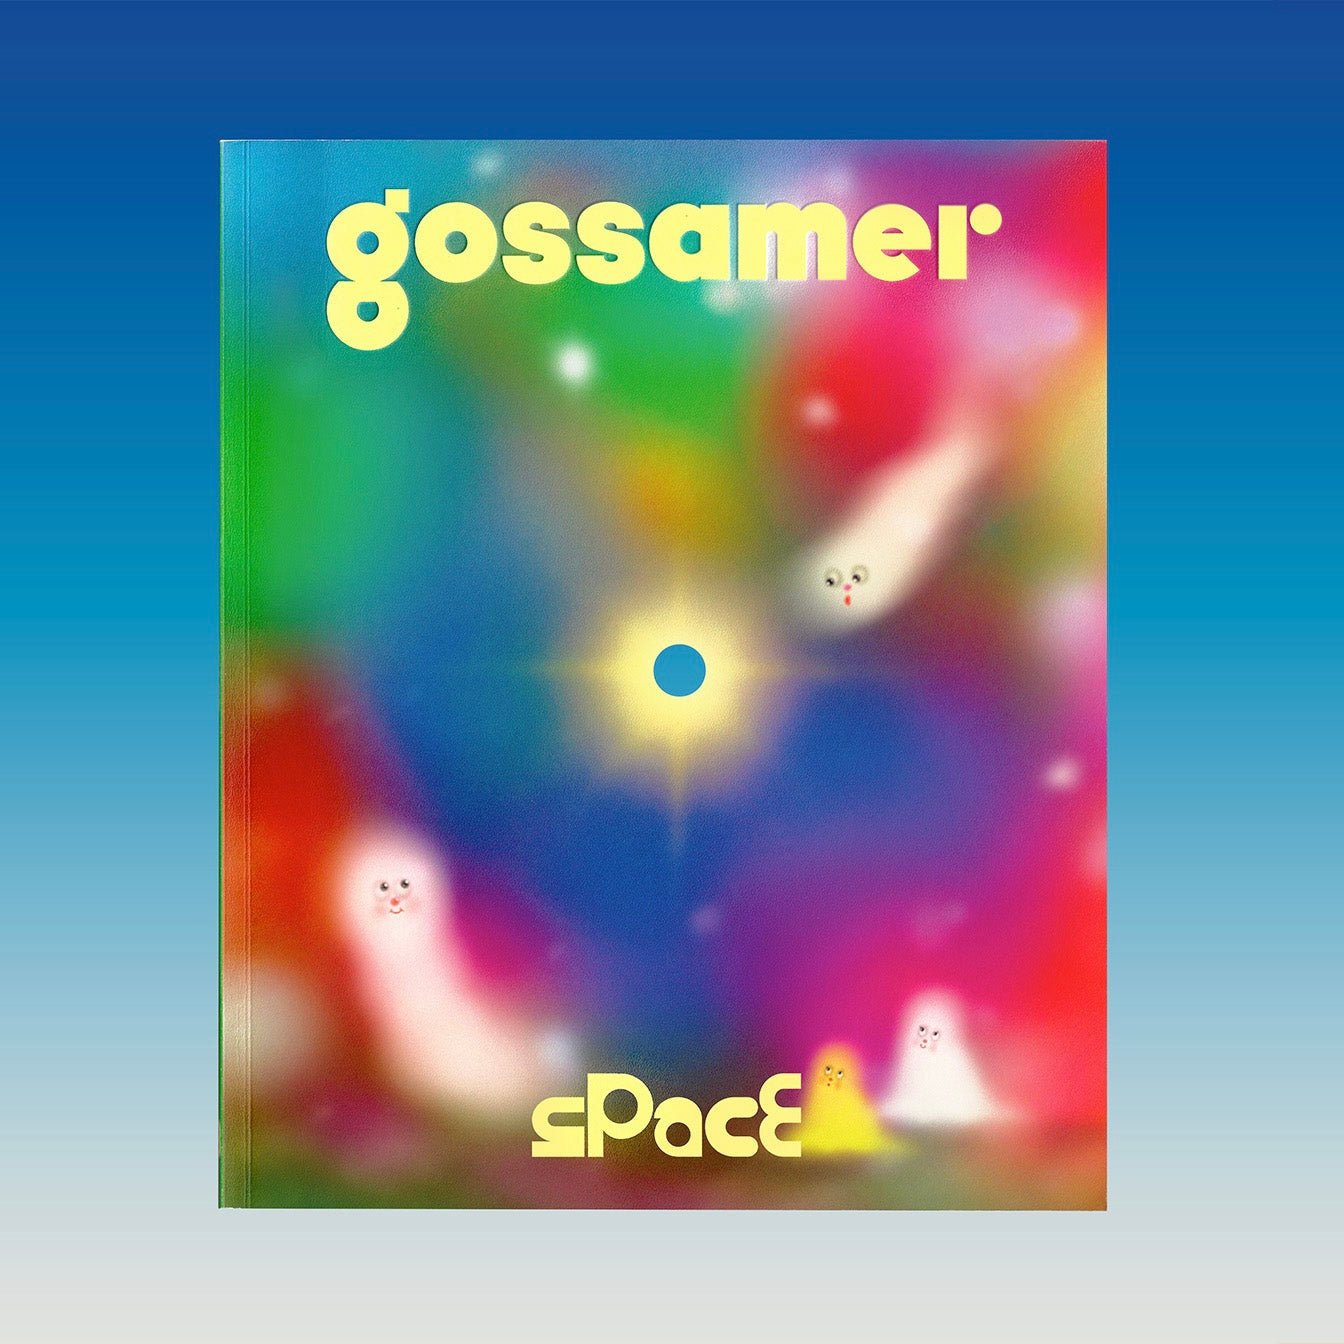 Gossamer Magazine: Space  CANDID HOME   